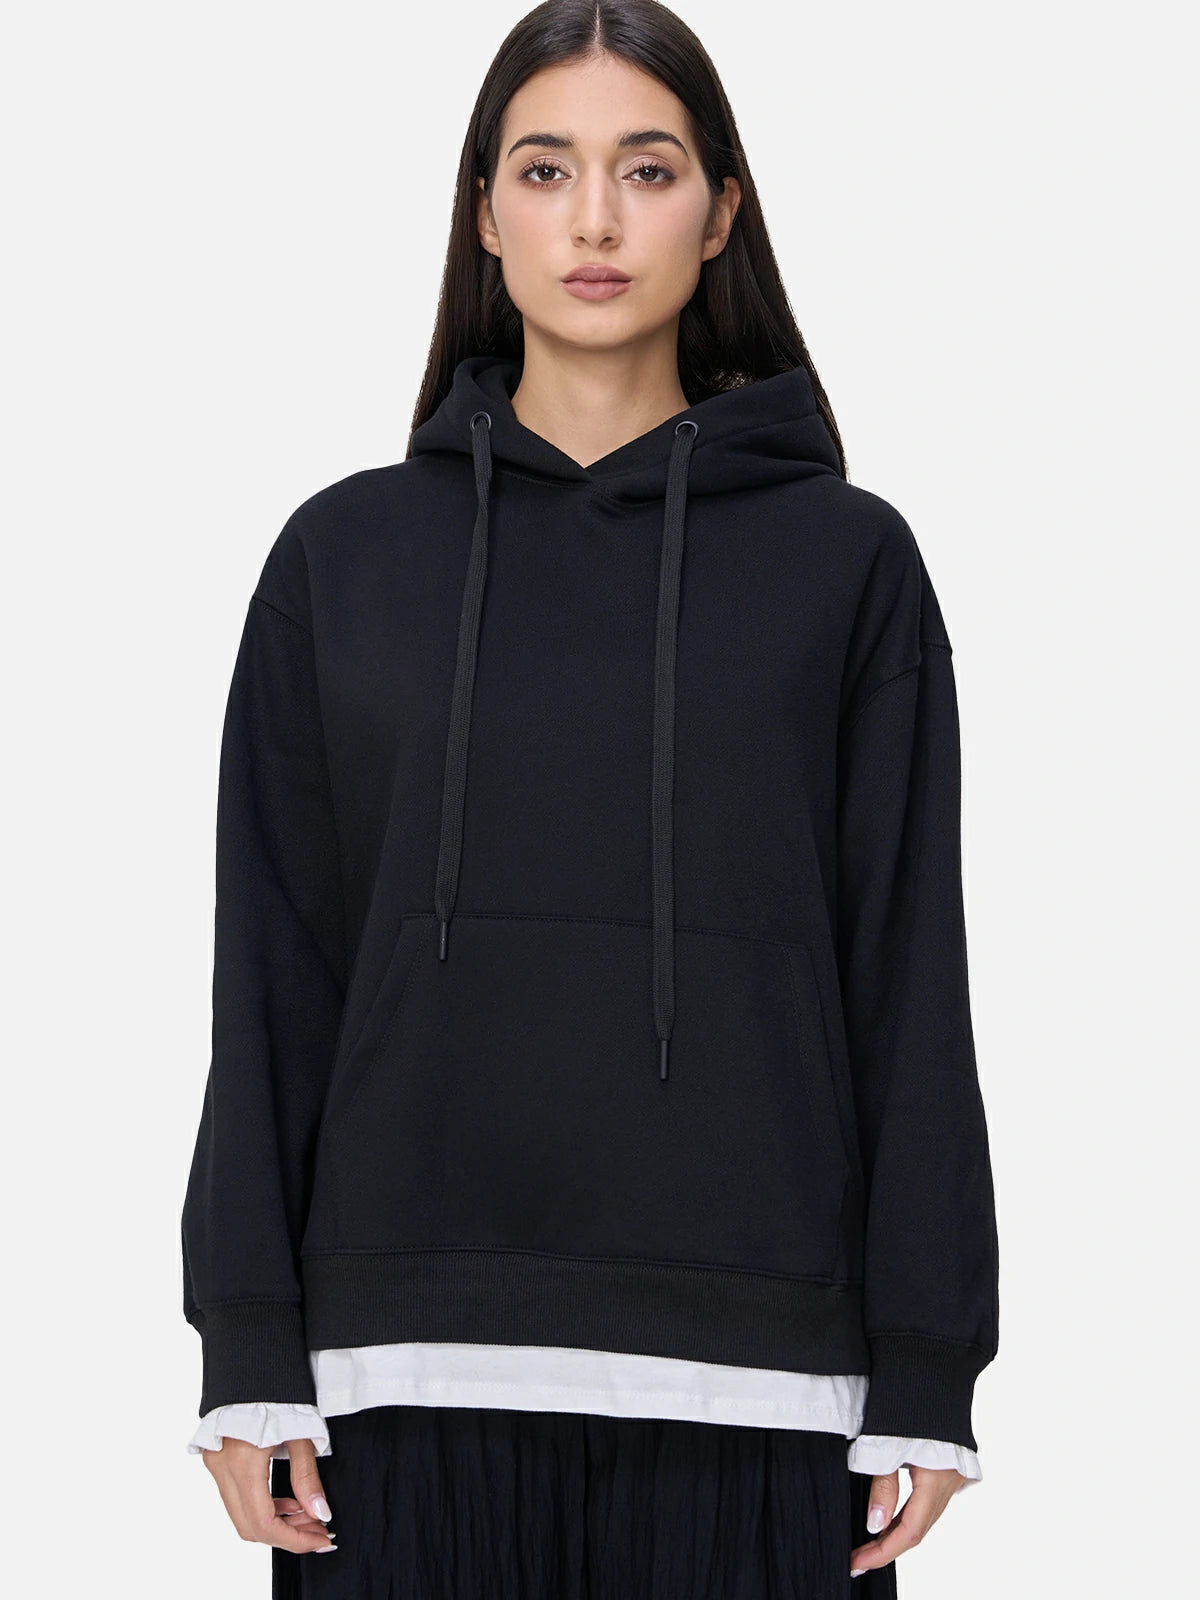 Fashionable black loose-fitting hooded sweatshirt 